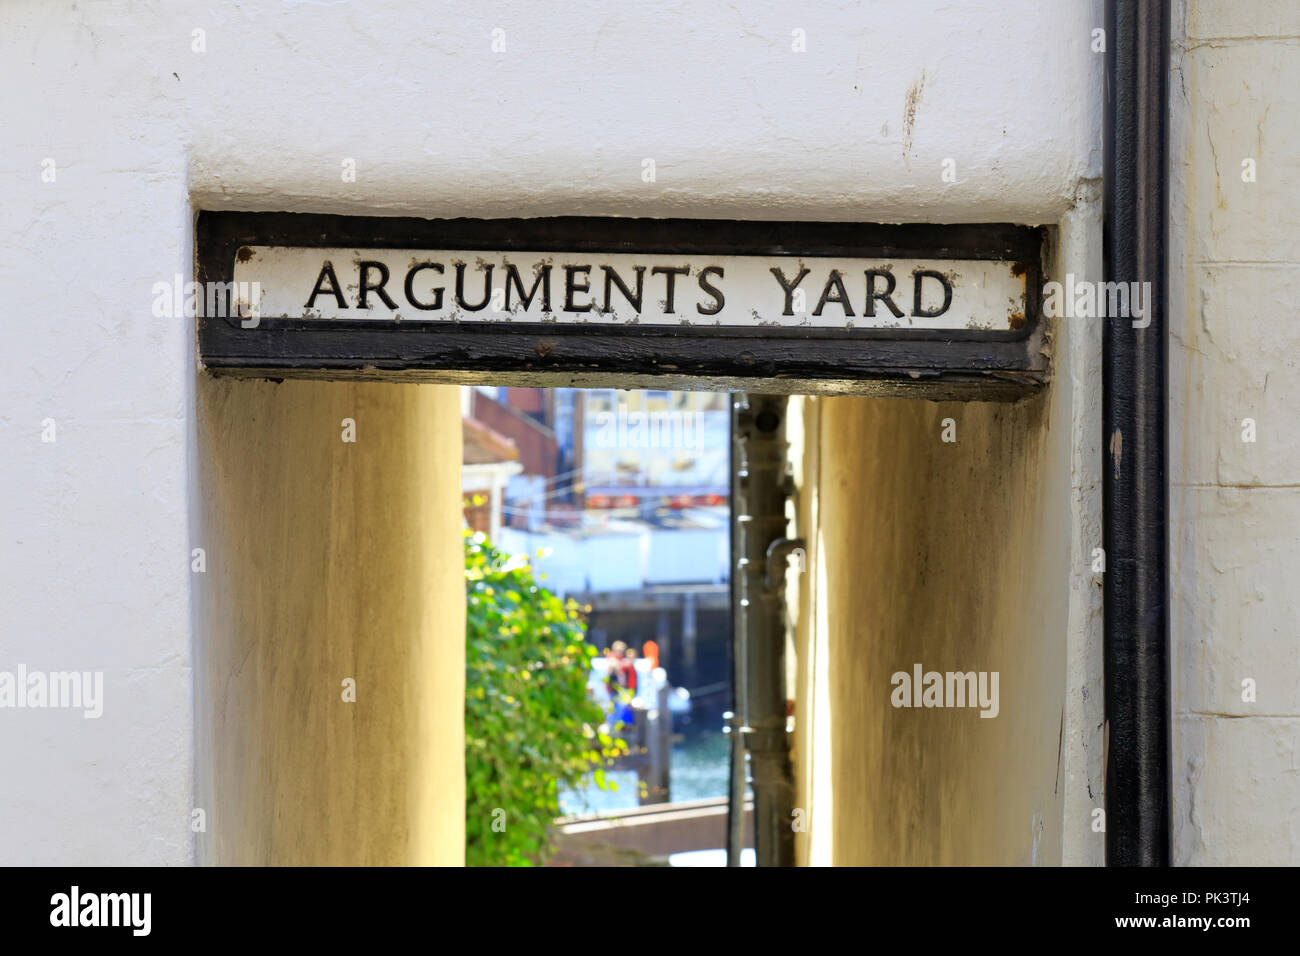 Arguments Yard sign, Whitby, North Yorkshire, England, UK. Stock Photo